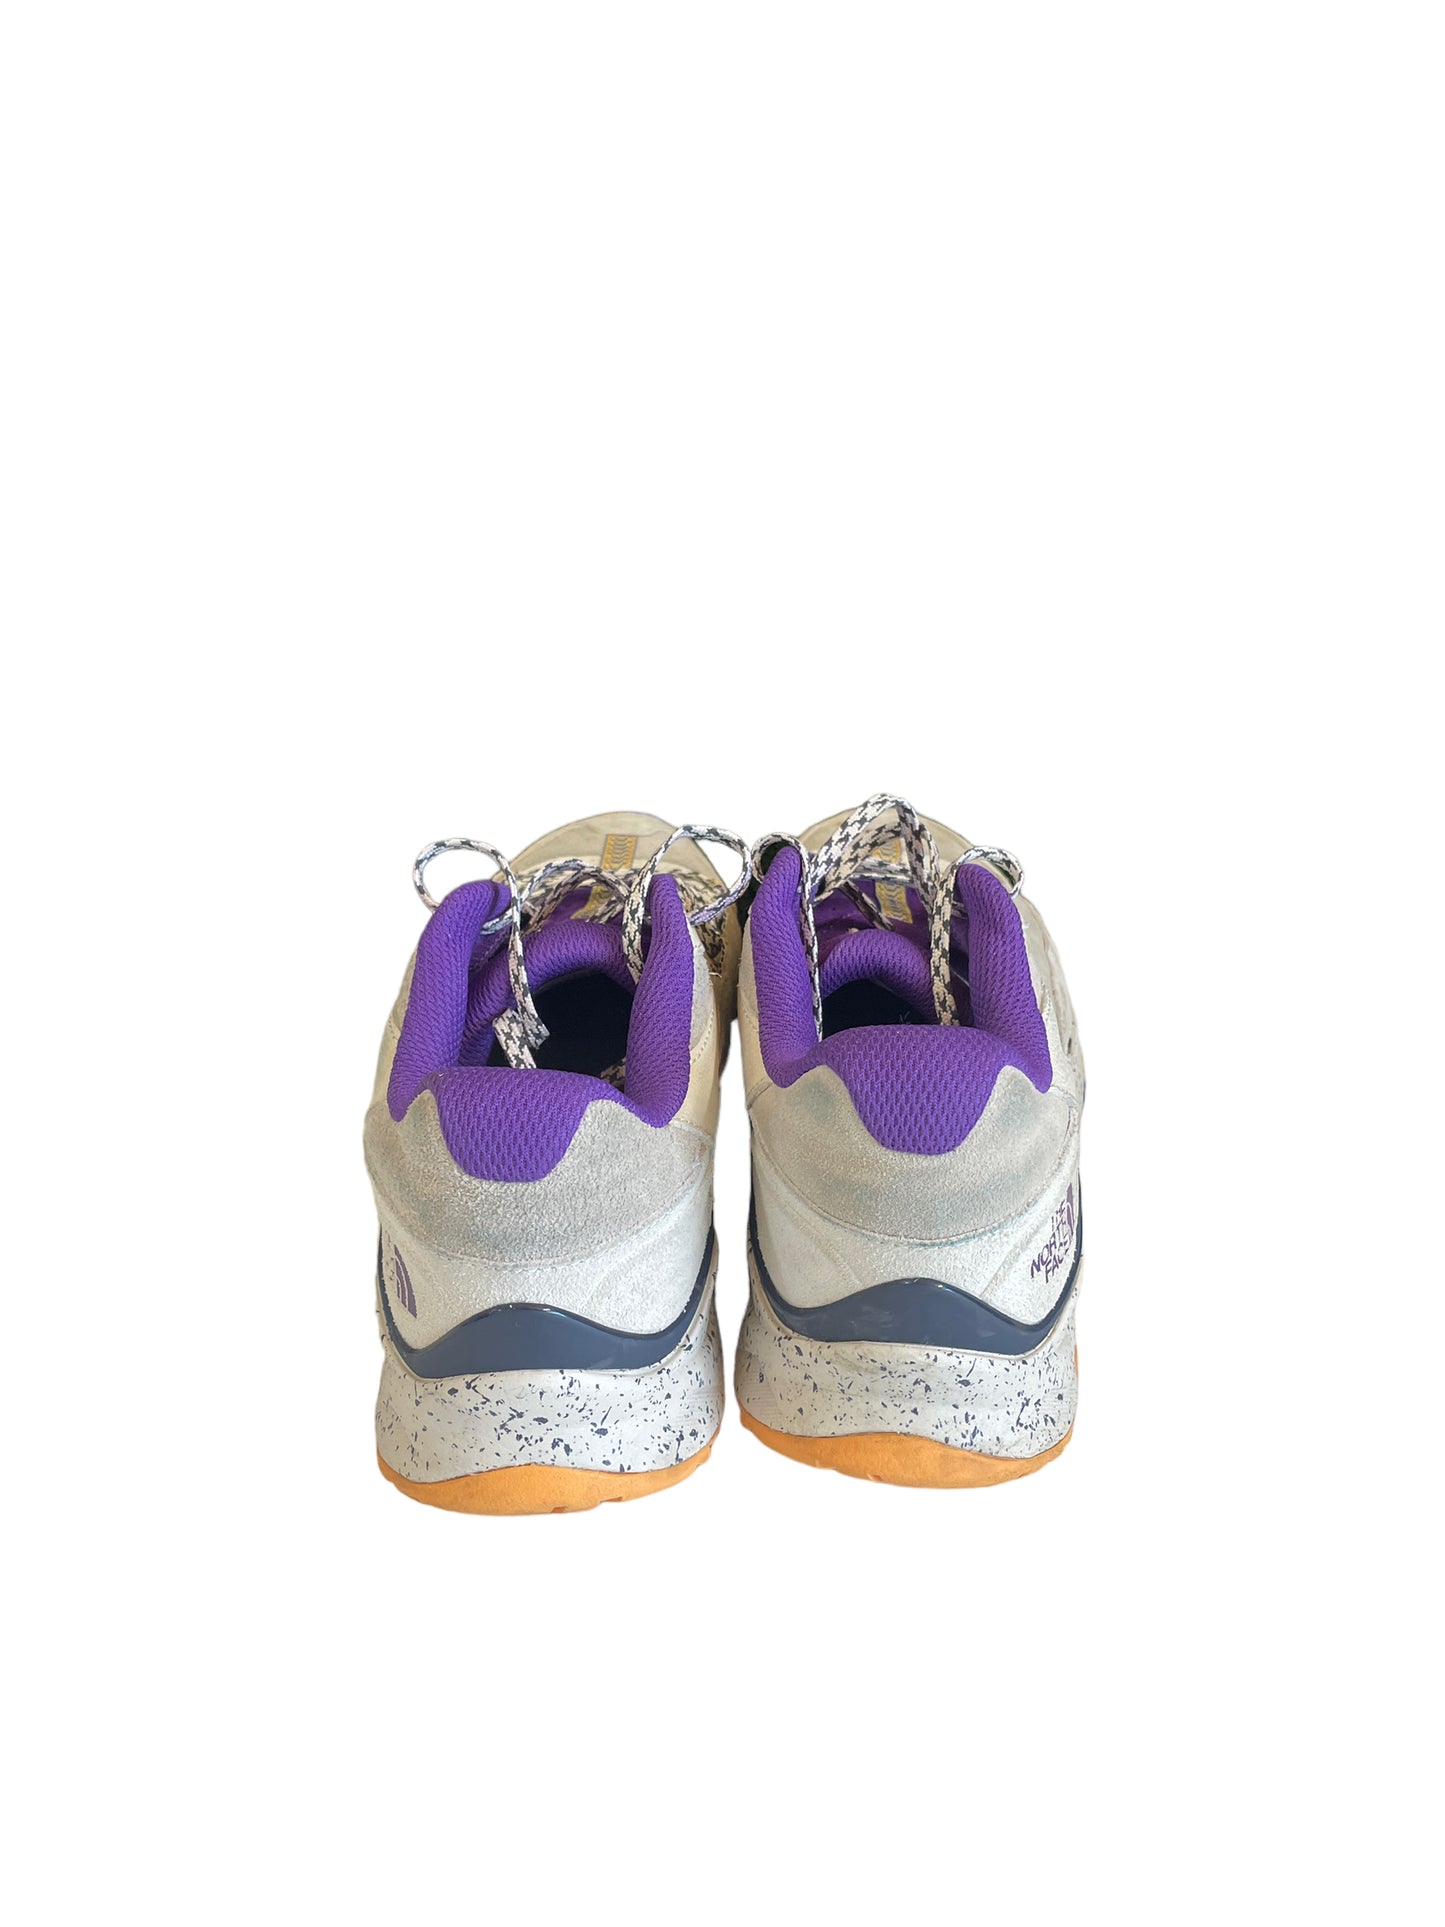 The North Face Vectiv Taraval Street Men's Shoes - Size 10